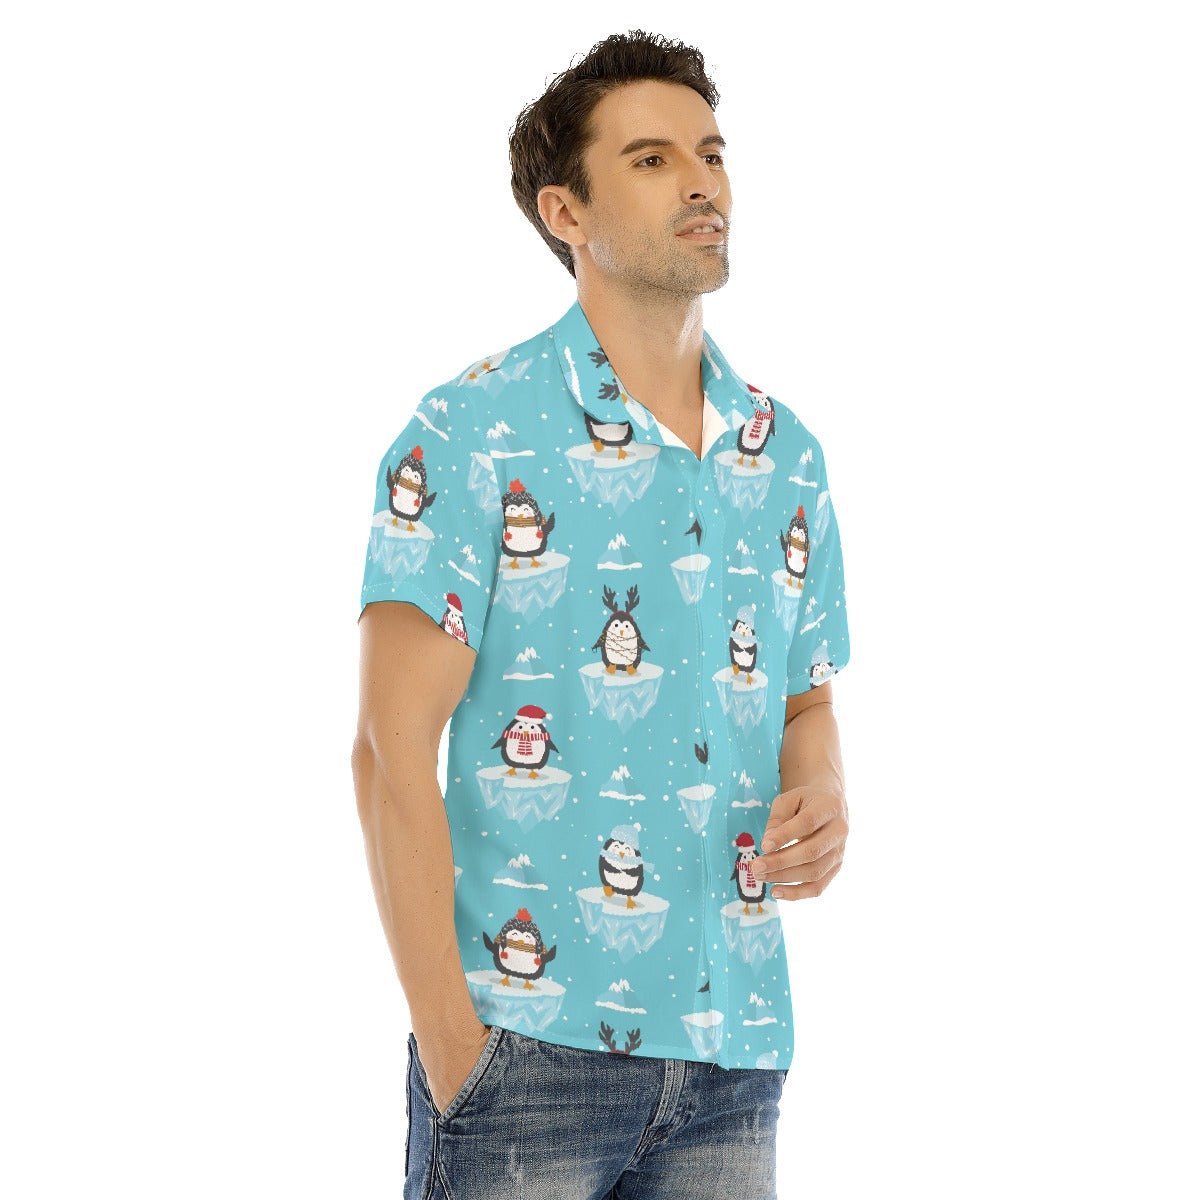 Men's Collar Short Sleeve Shirt - Icy Penguins - Festive Style